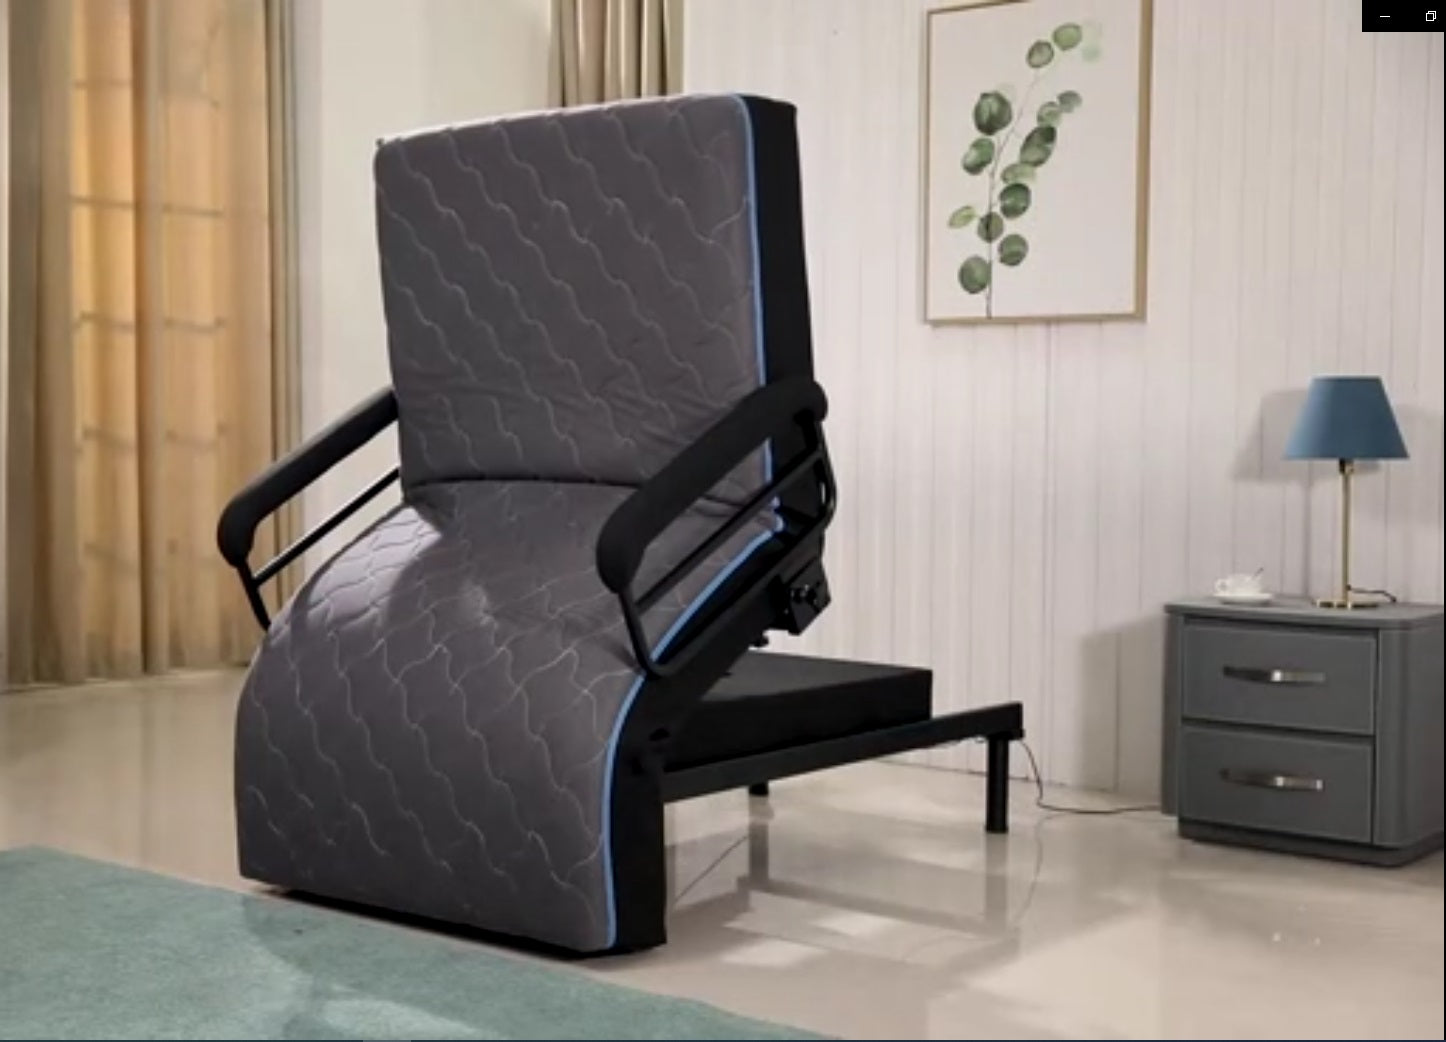 FirstClass Sleep-to-Stand Lift Chair - Platinum Health Group